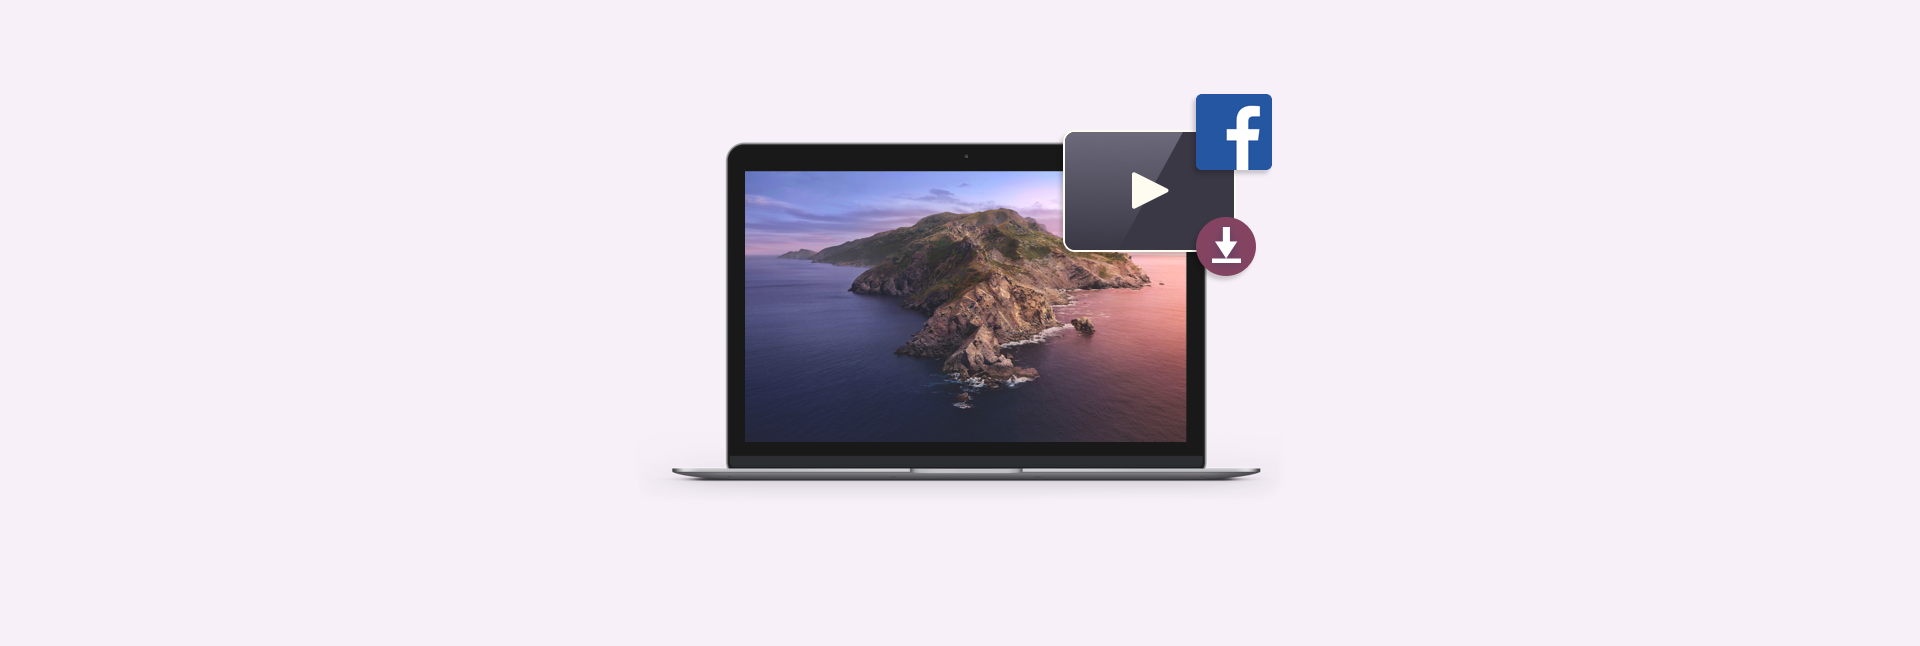 instgram video downloader for mac +review